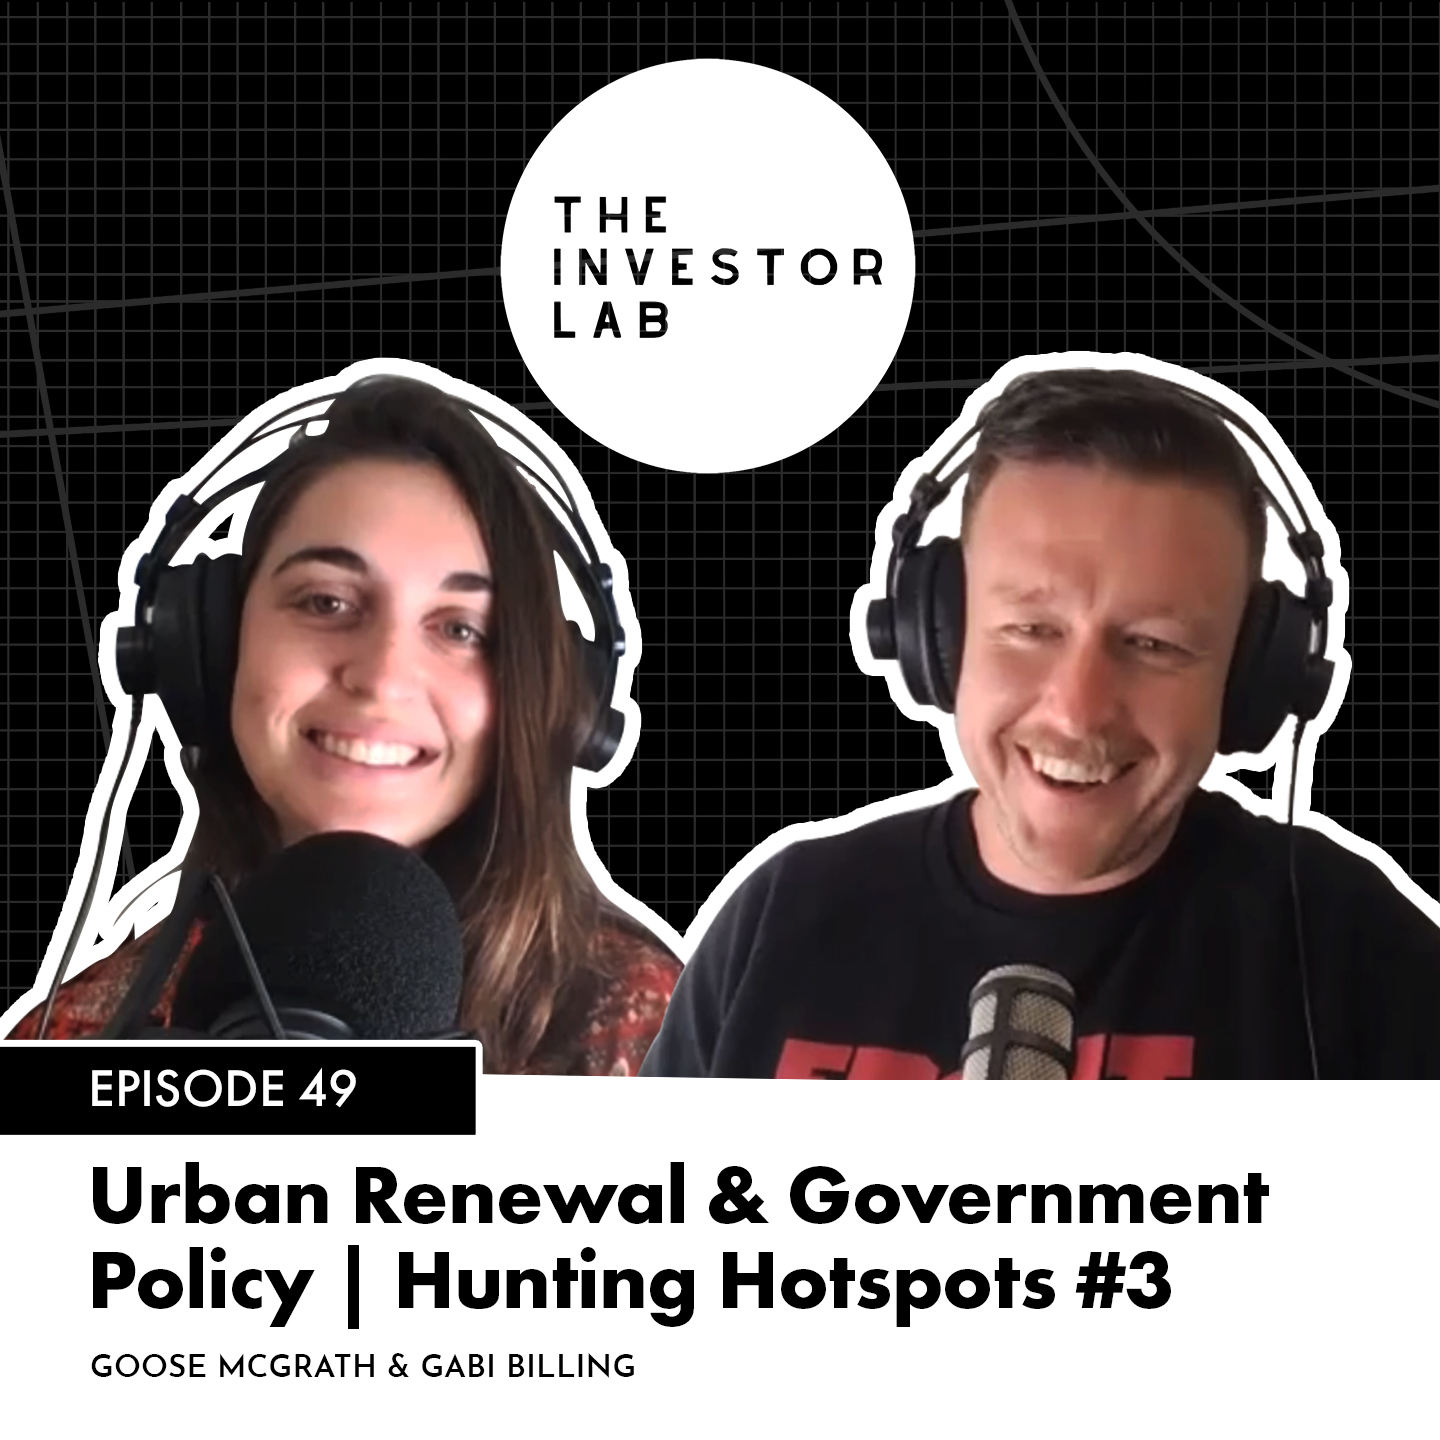 Urban Renewal & Government Policy | Hunting Hotspots #3